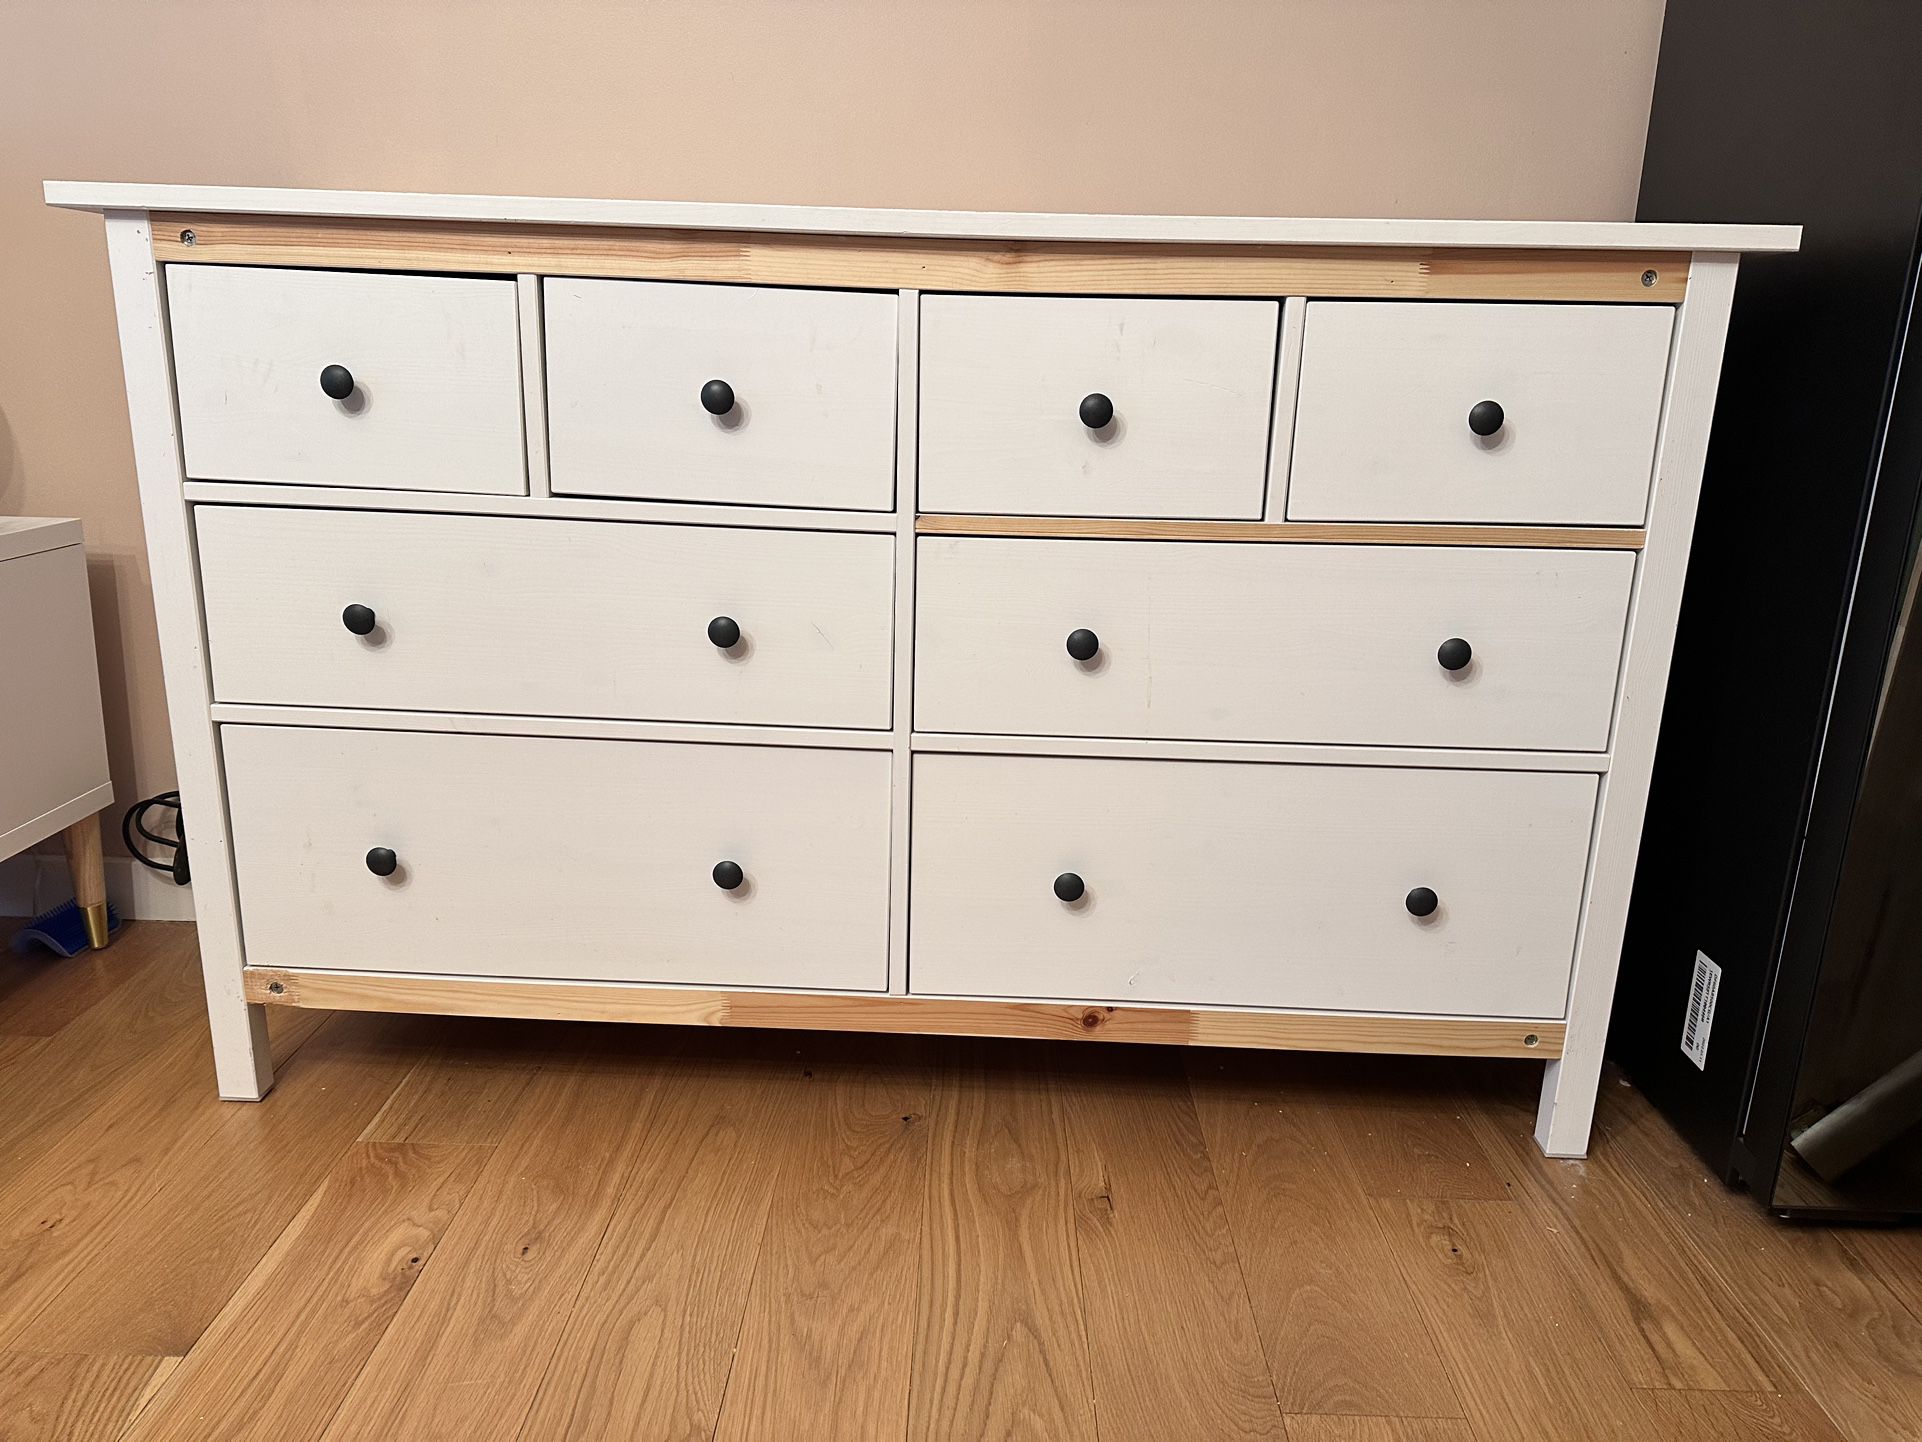 8 Drawer IKEA Dresser In Good Condition